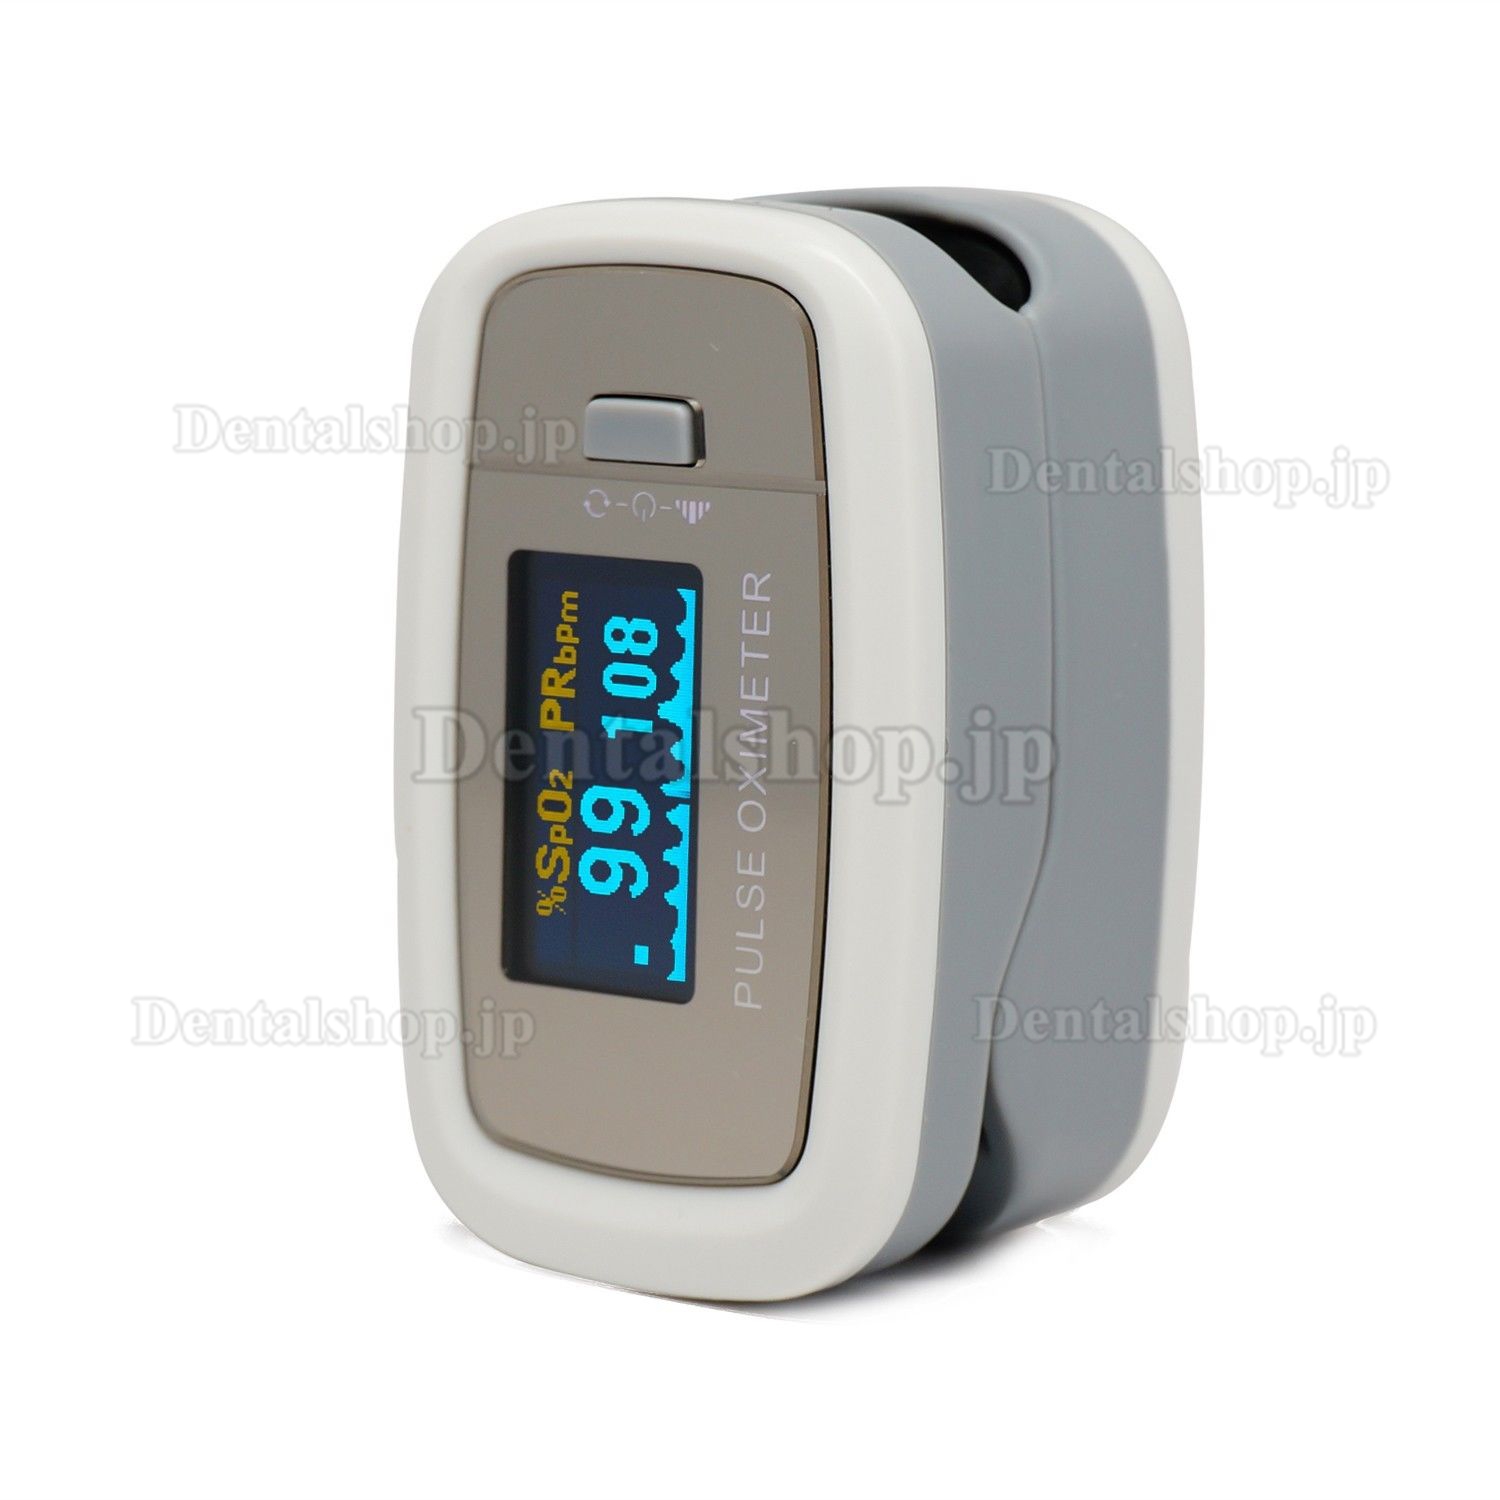 COMTEC® CMS50D1医療用·家庭用血中酸素濃度測定器(パルスオキシメーター)